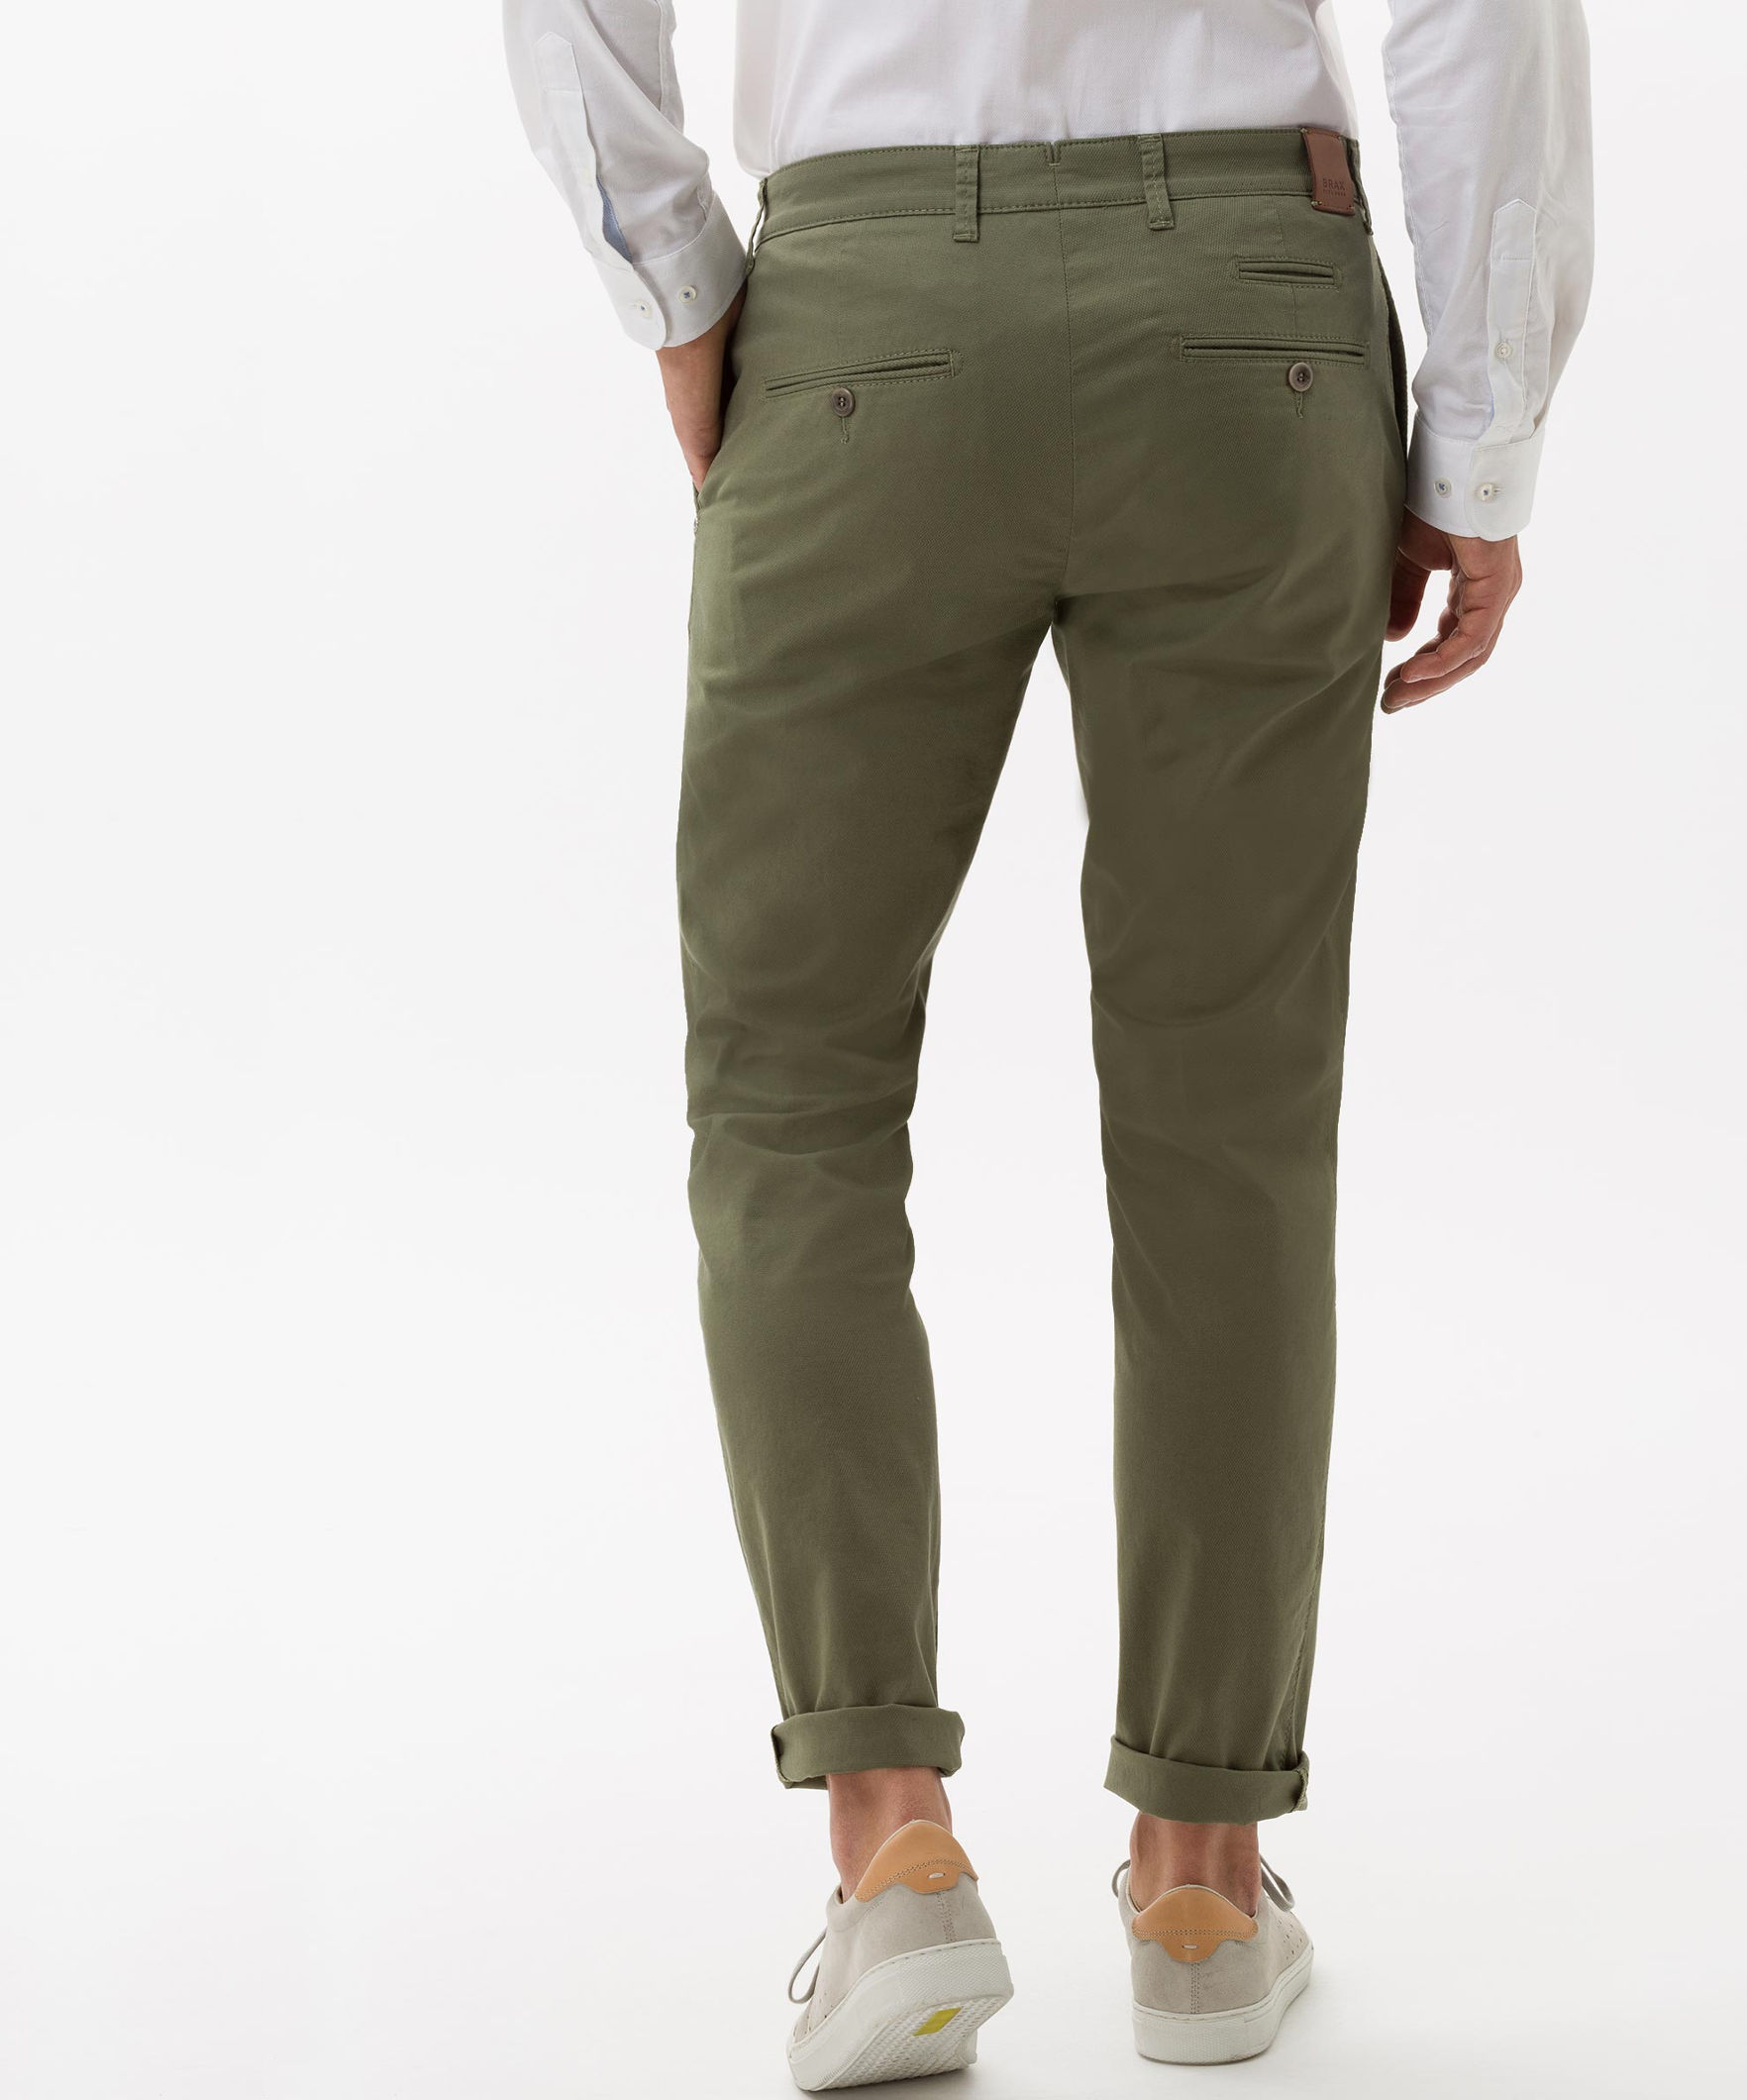 Brax Fabio In Hi-Flex Pants Green | Jan Rozing Men's Fashion